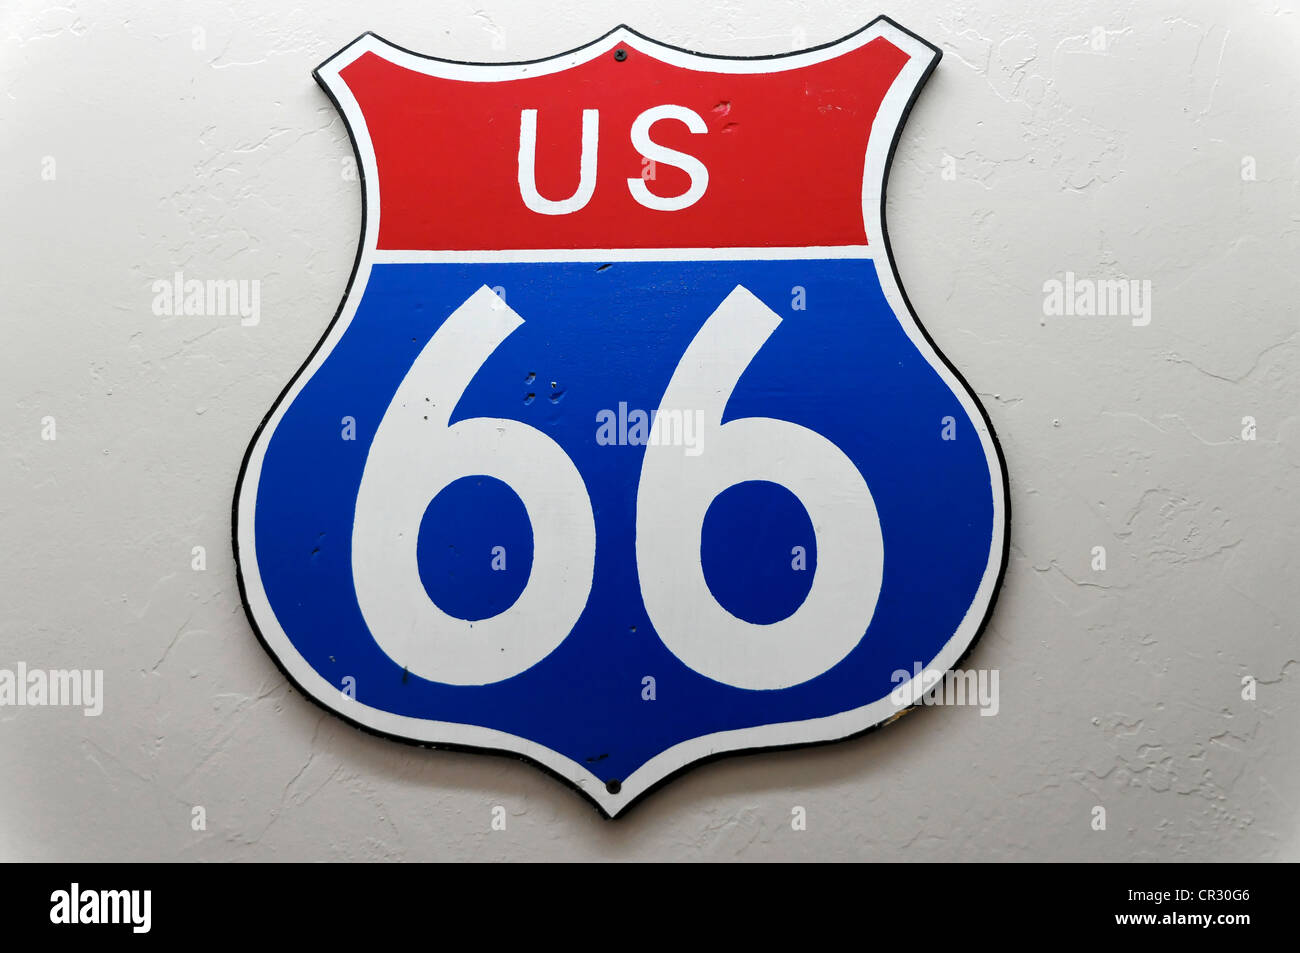 US 66, Werbeschild an der historischen Route 66, Antares, Kingman, Arizona, USA, Nordamerika Stockfoto